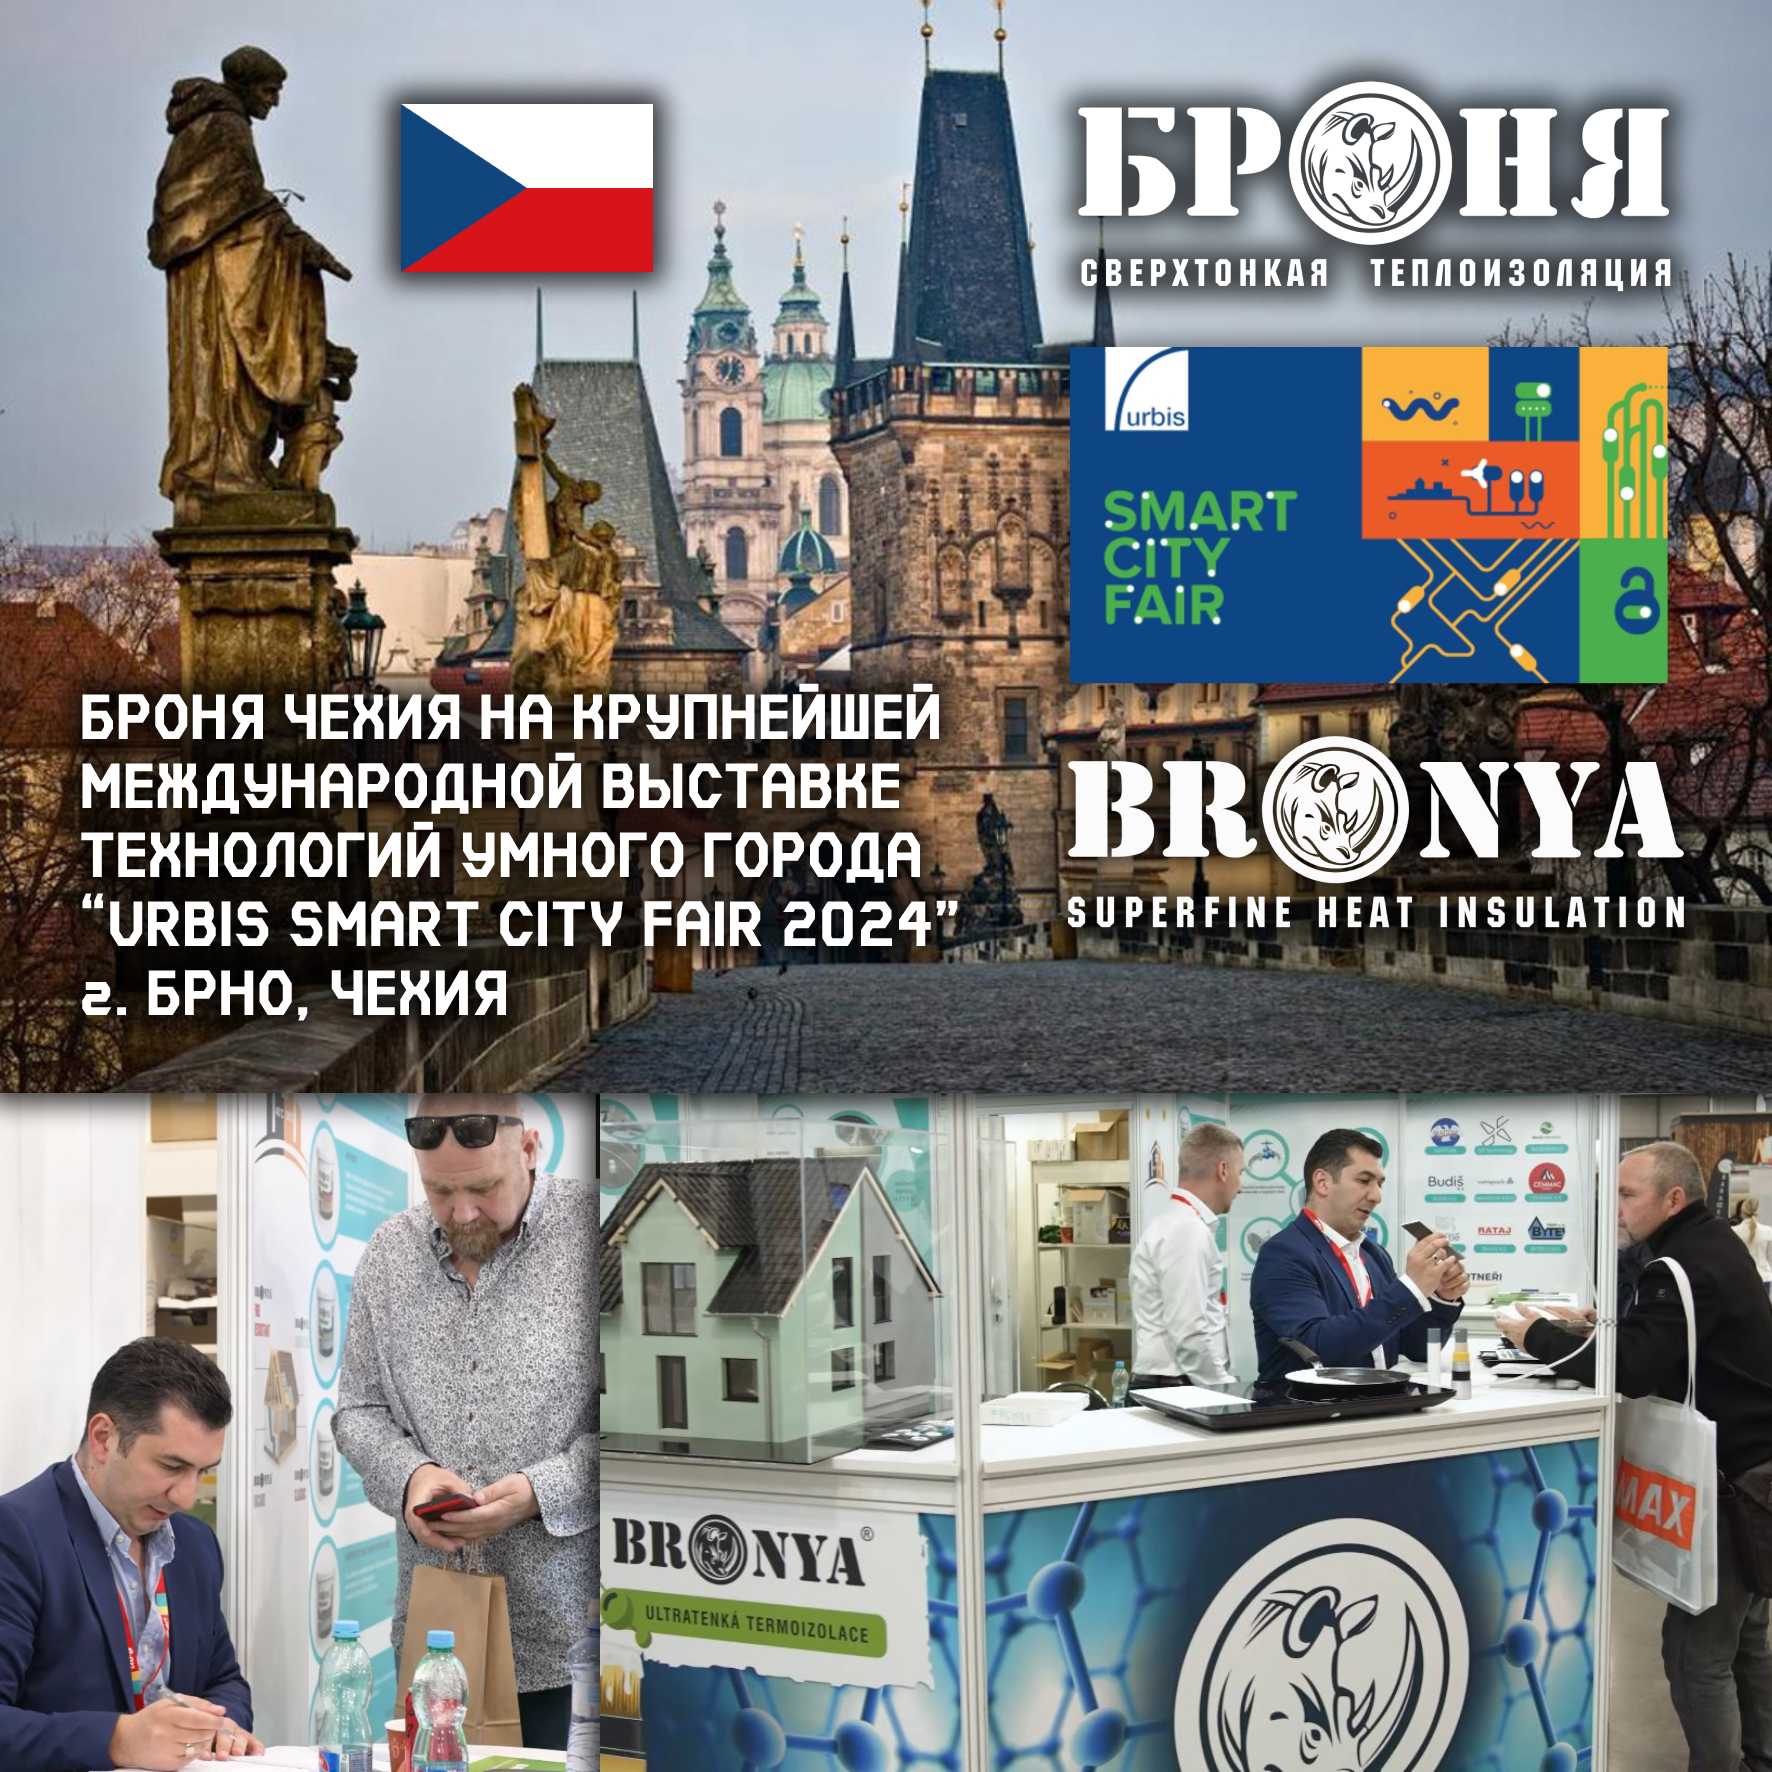 Bronya Czech Republic at the largest international exhibition of smart city technologies “Urbis Smart City Fair 2024” in Brno, Czech Republic (photos and videos)